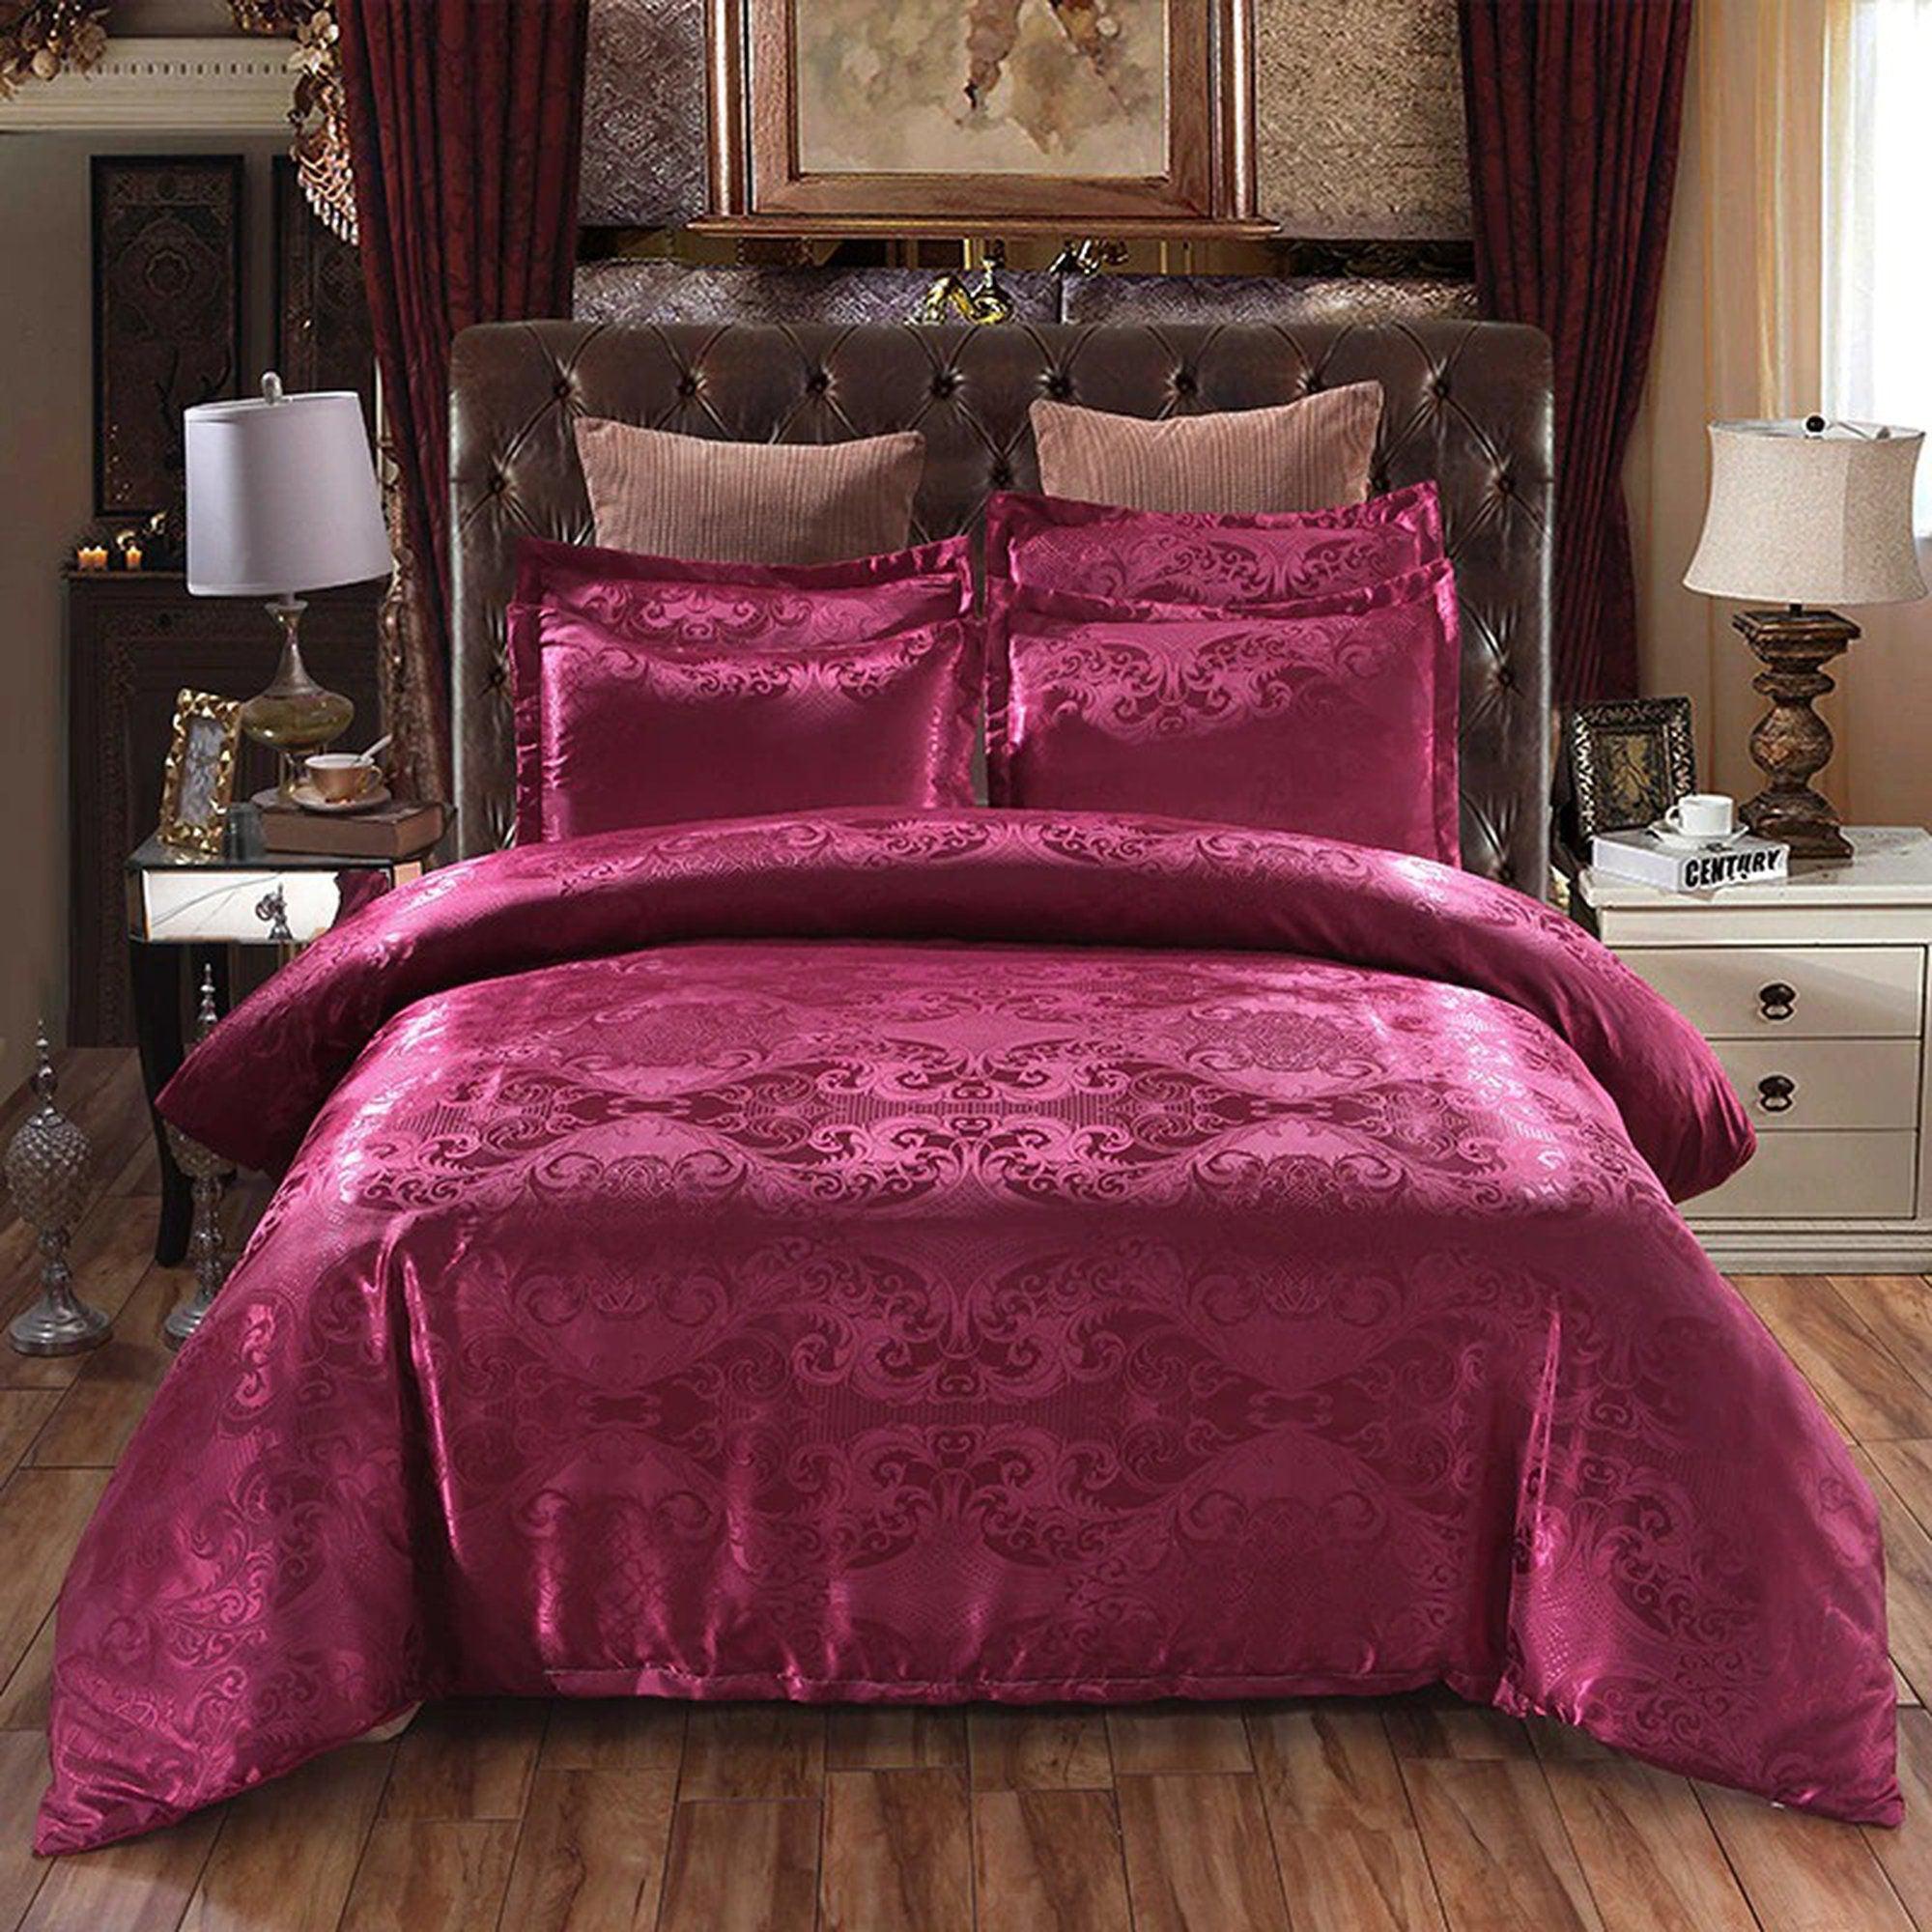 daintyduvet Burgundy Red Luxury Bedding made with Silky Jacquard Fabric, Damask Duvet Cover Set, Designer Bedding, Aesthetic Duvet King Queen Full Twin